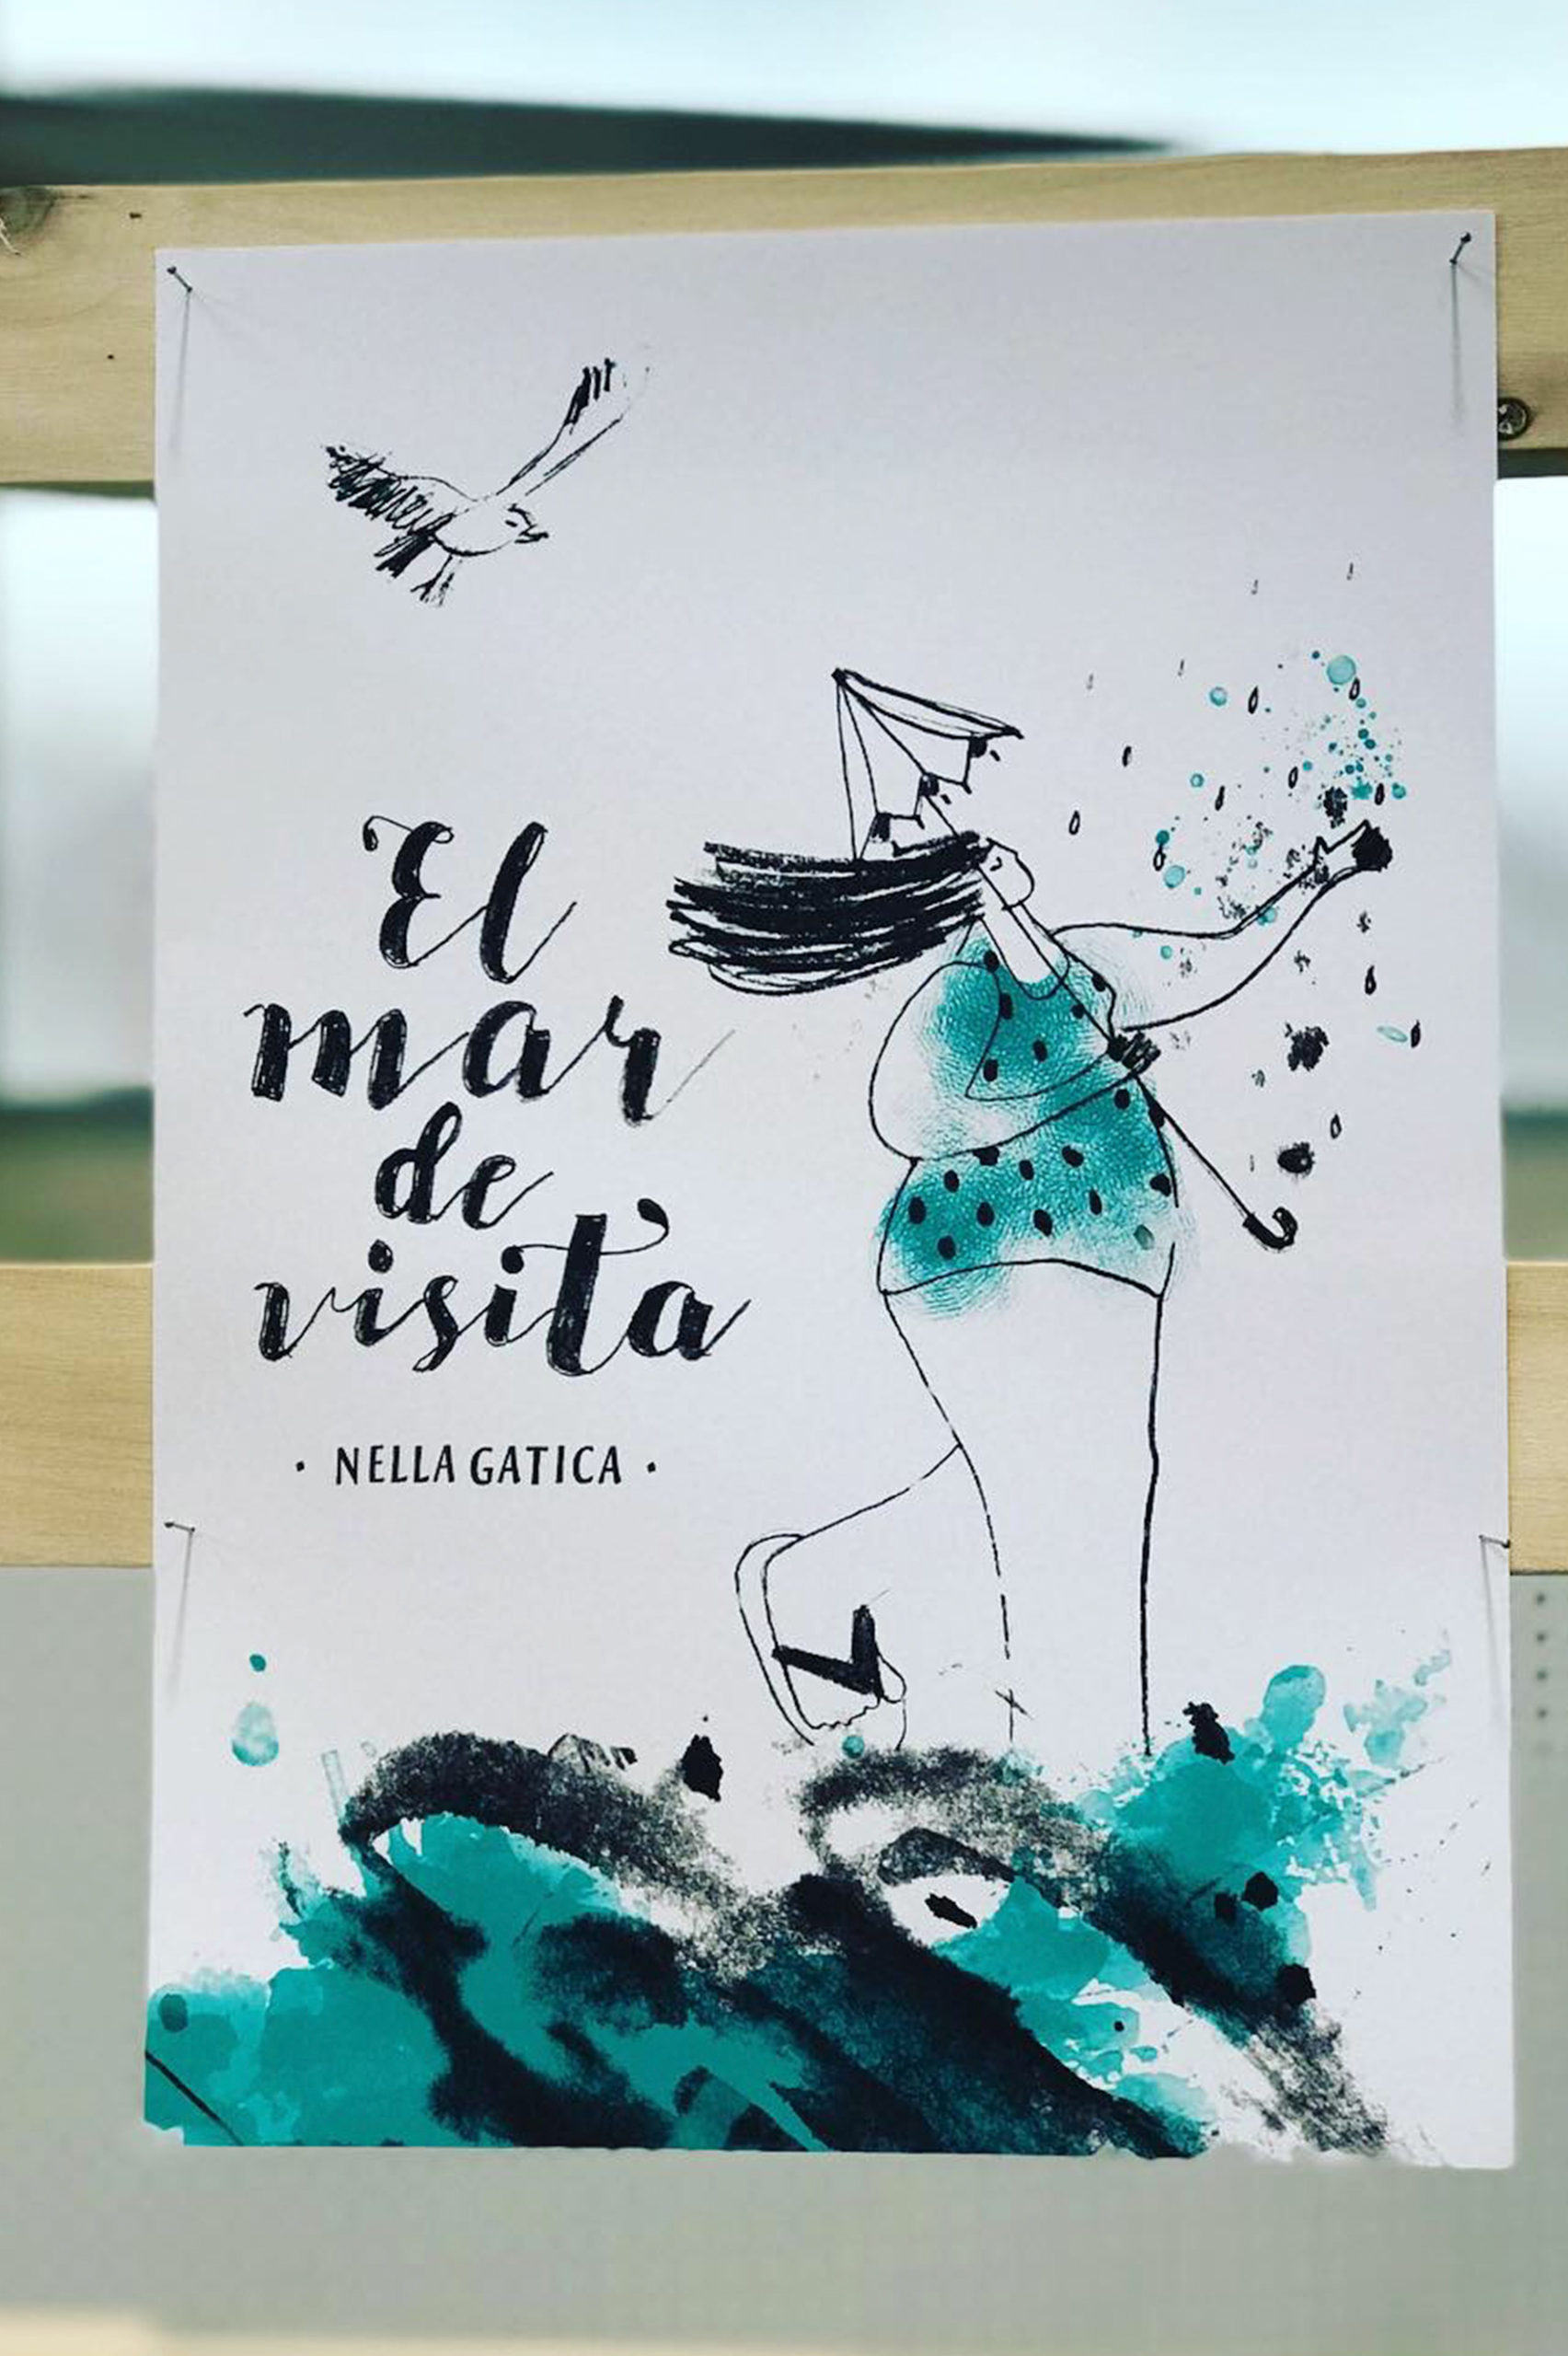 Nella Gatica - Author and illustrator